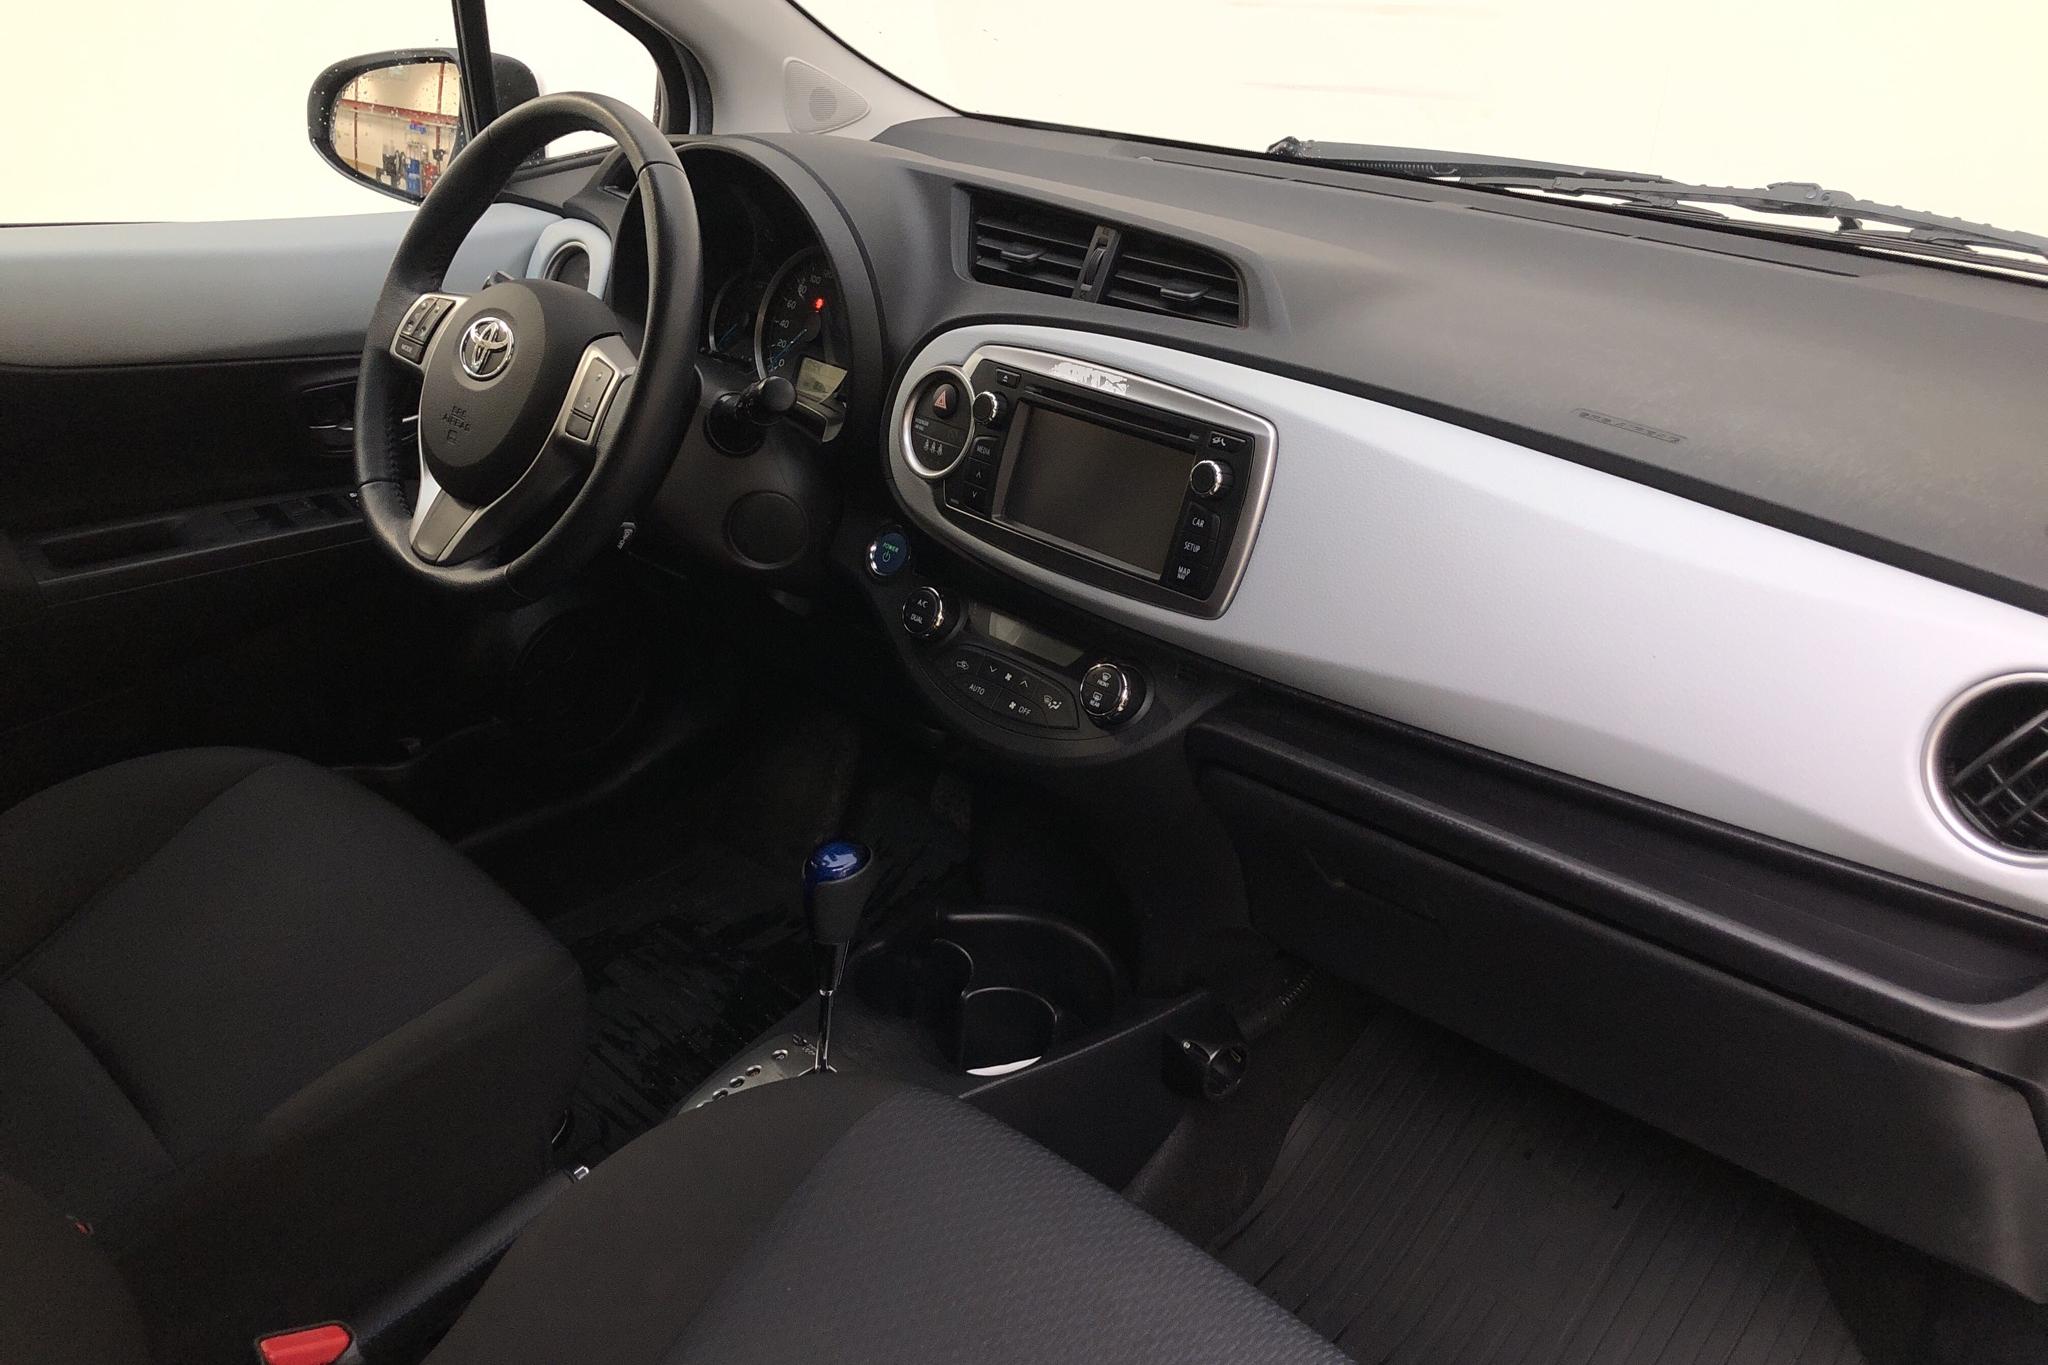 Toyota Yaris 1.5 HSD 5dr (75hk) - 8 343 mil - Automat - vit - 2014